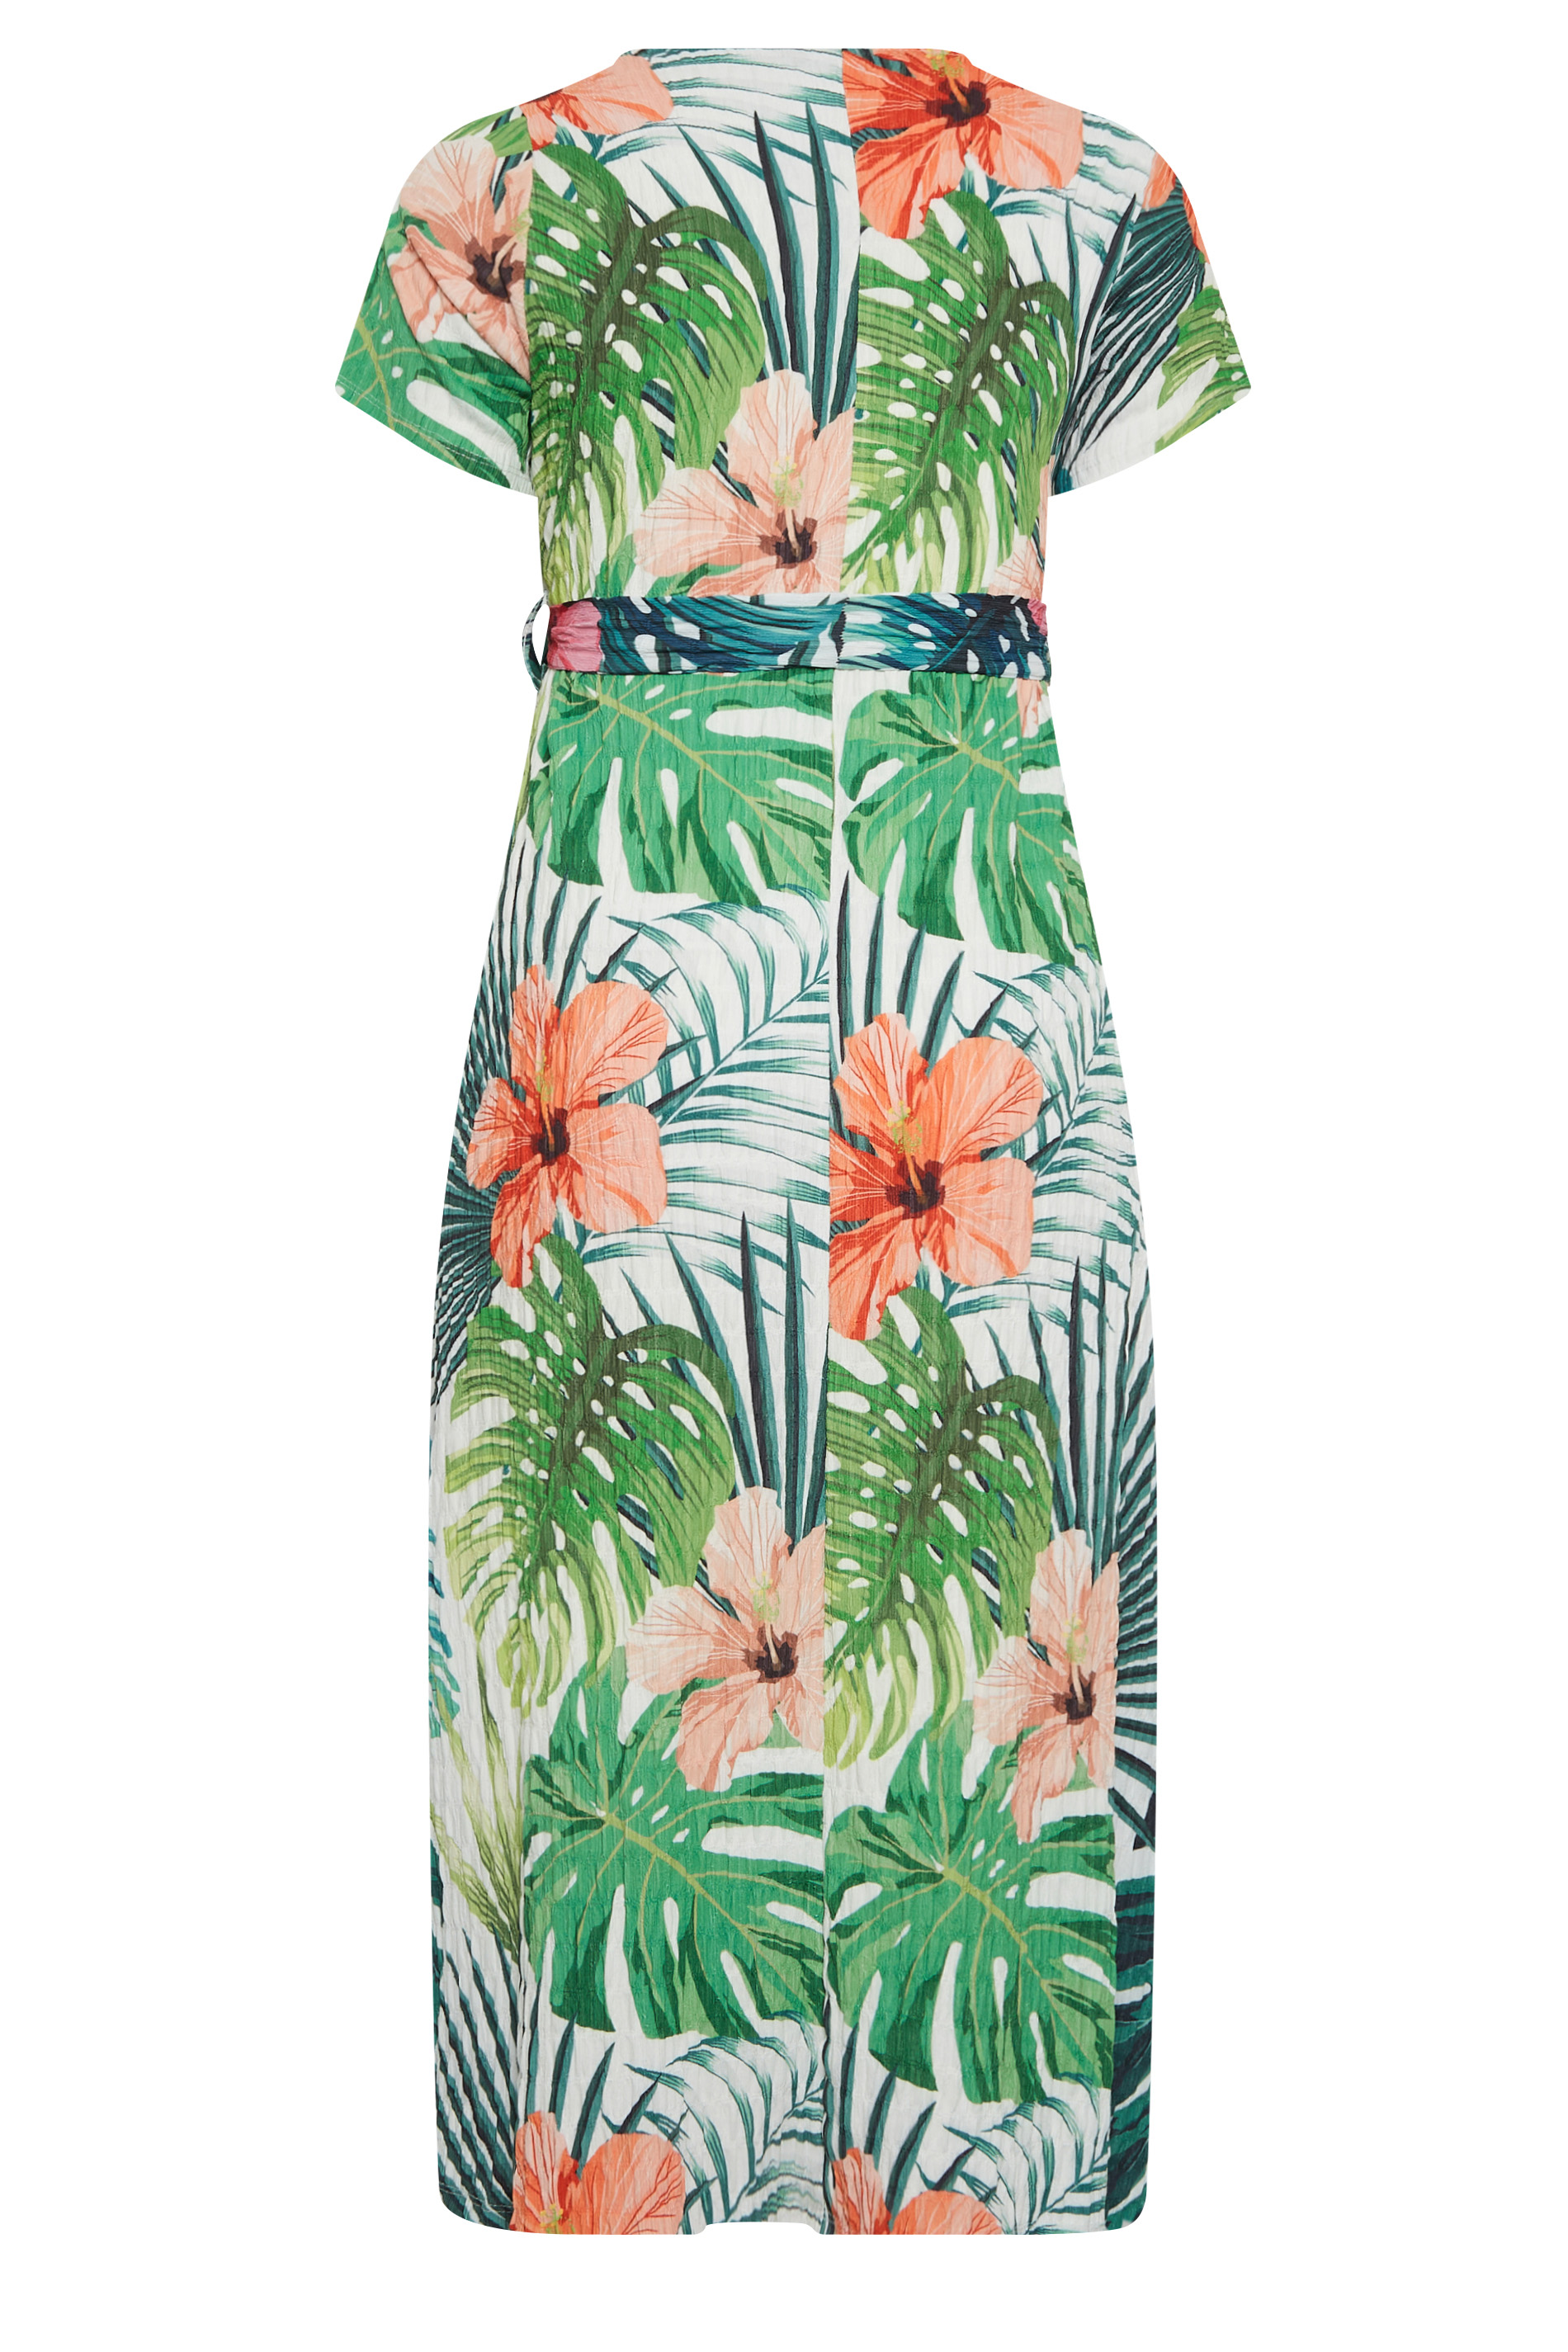 Yours Curve Womens Plus Size Tropical Floral Print Wrap Dress | eBay